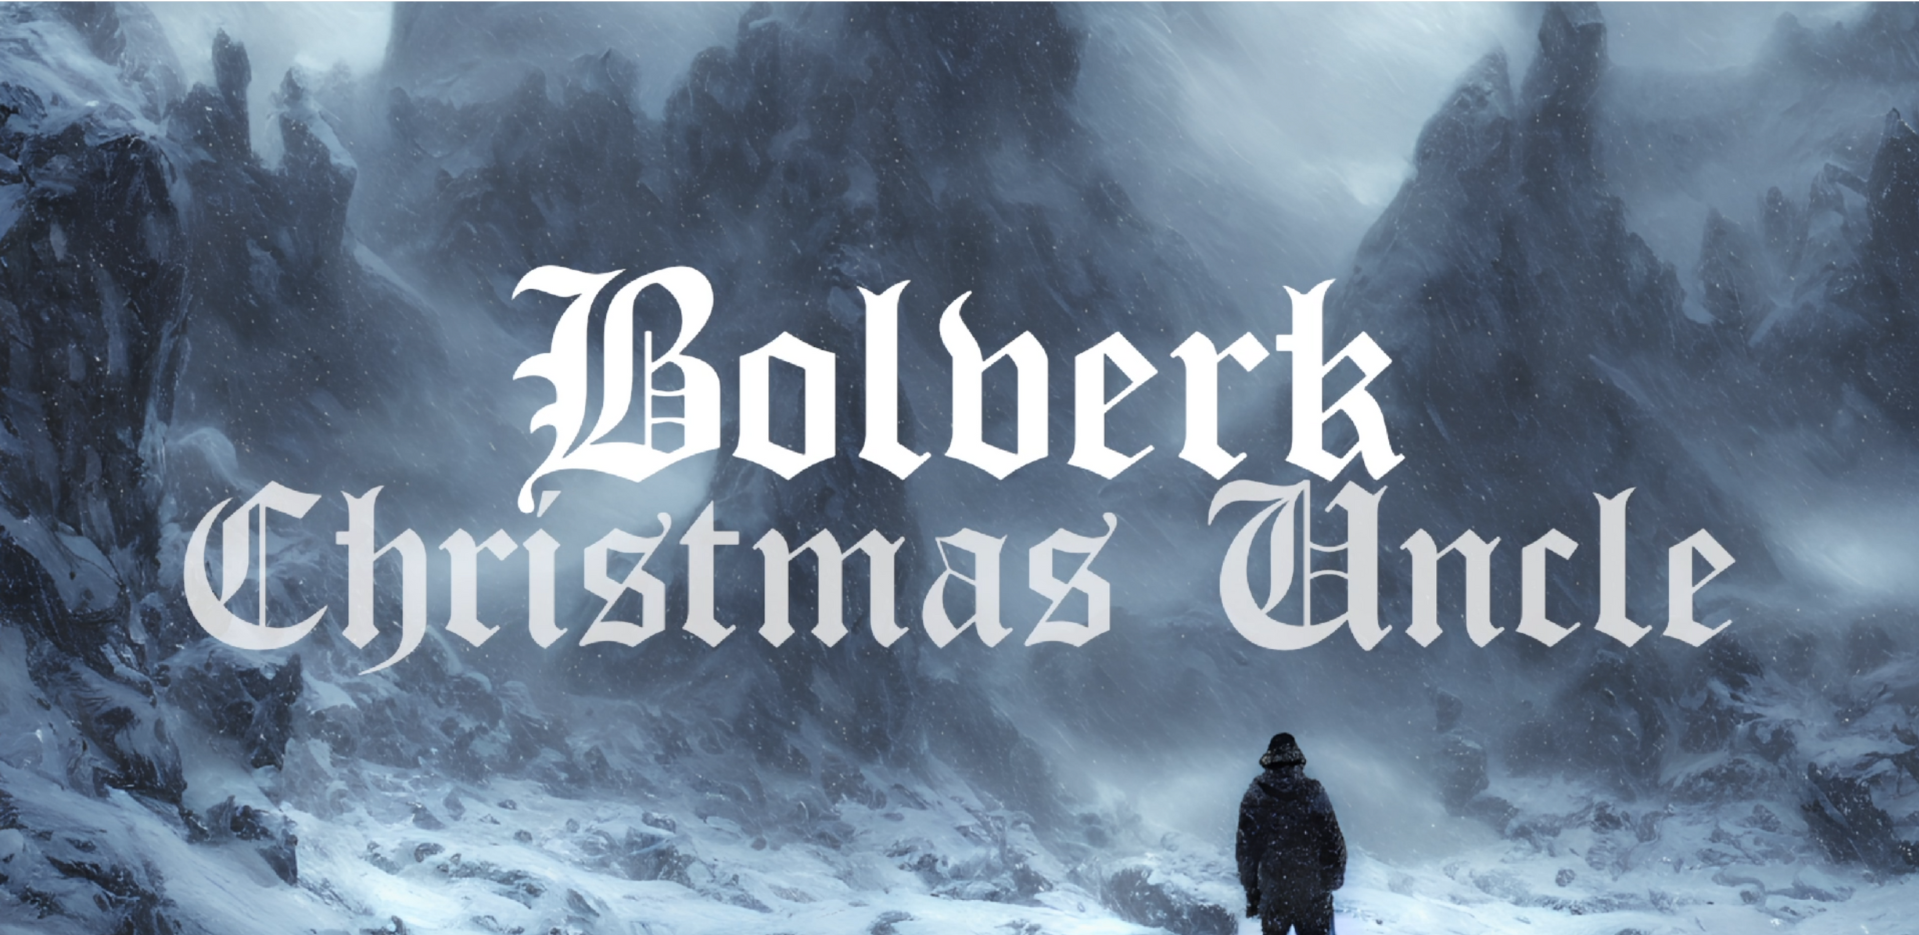 Christmas Uncle - Bolverk